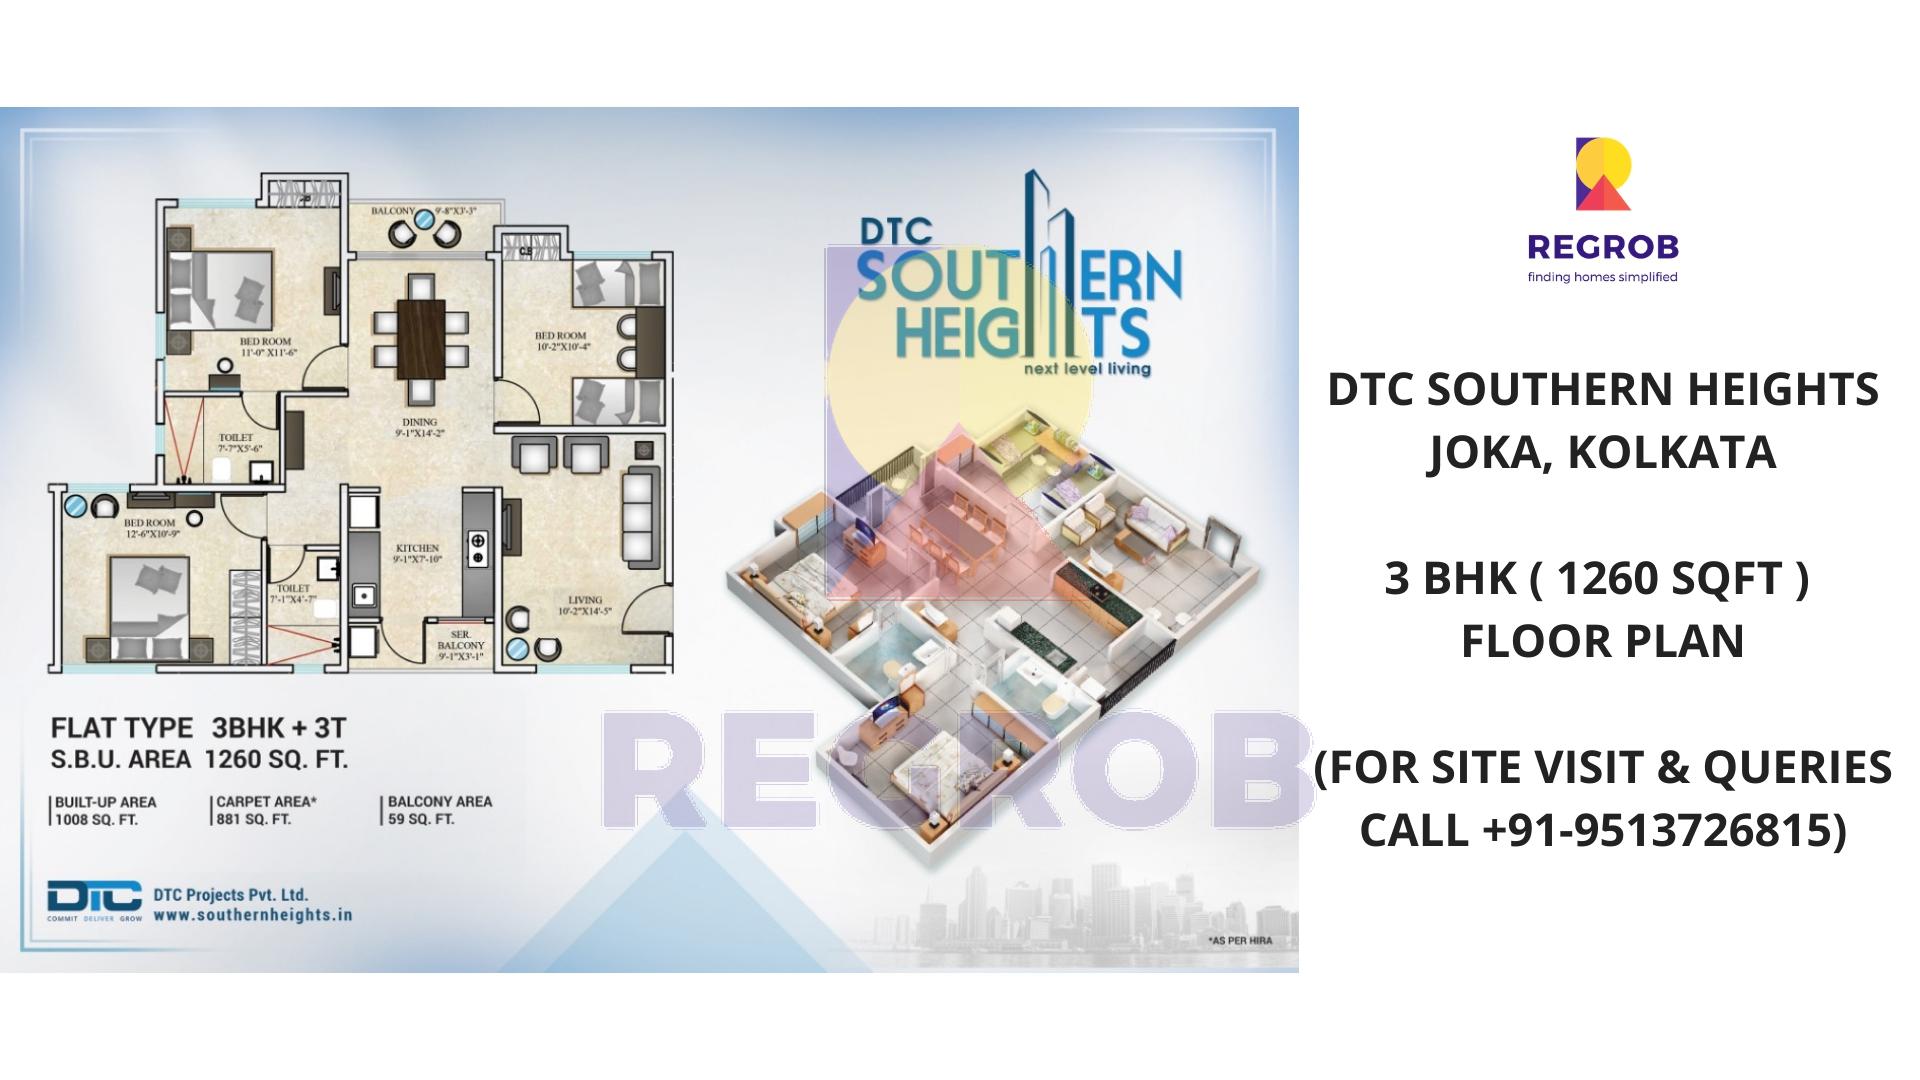 DTC Southern Heights Joka Kolkata